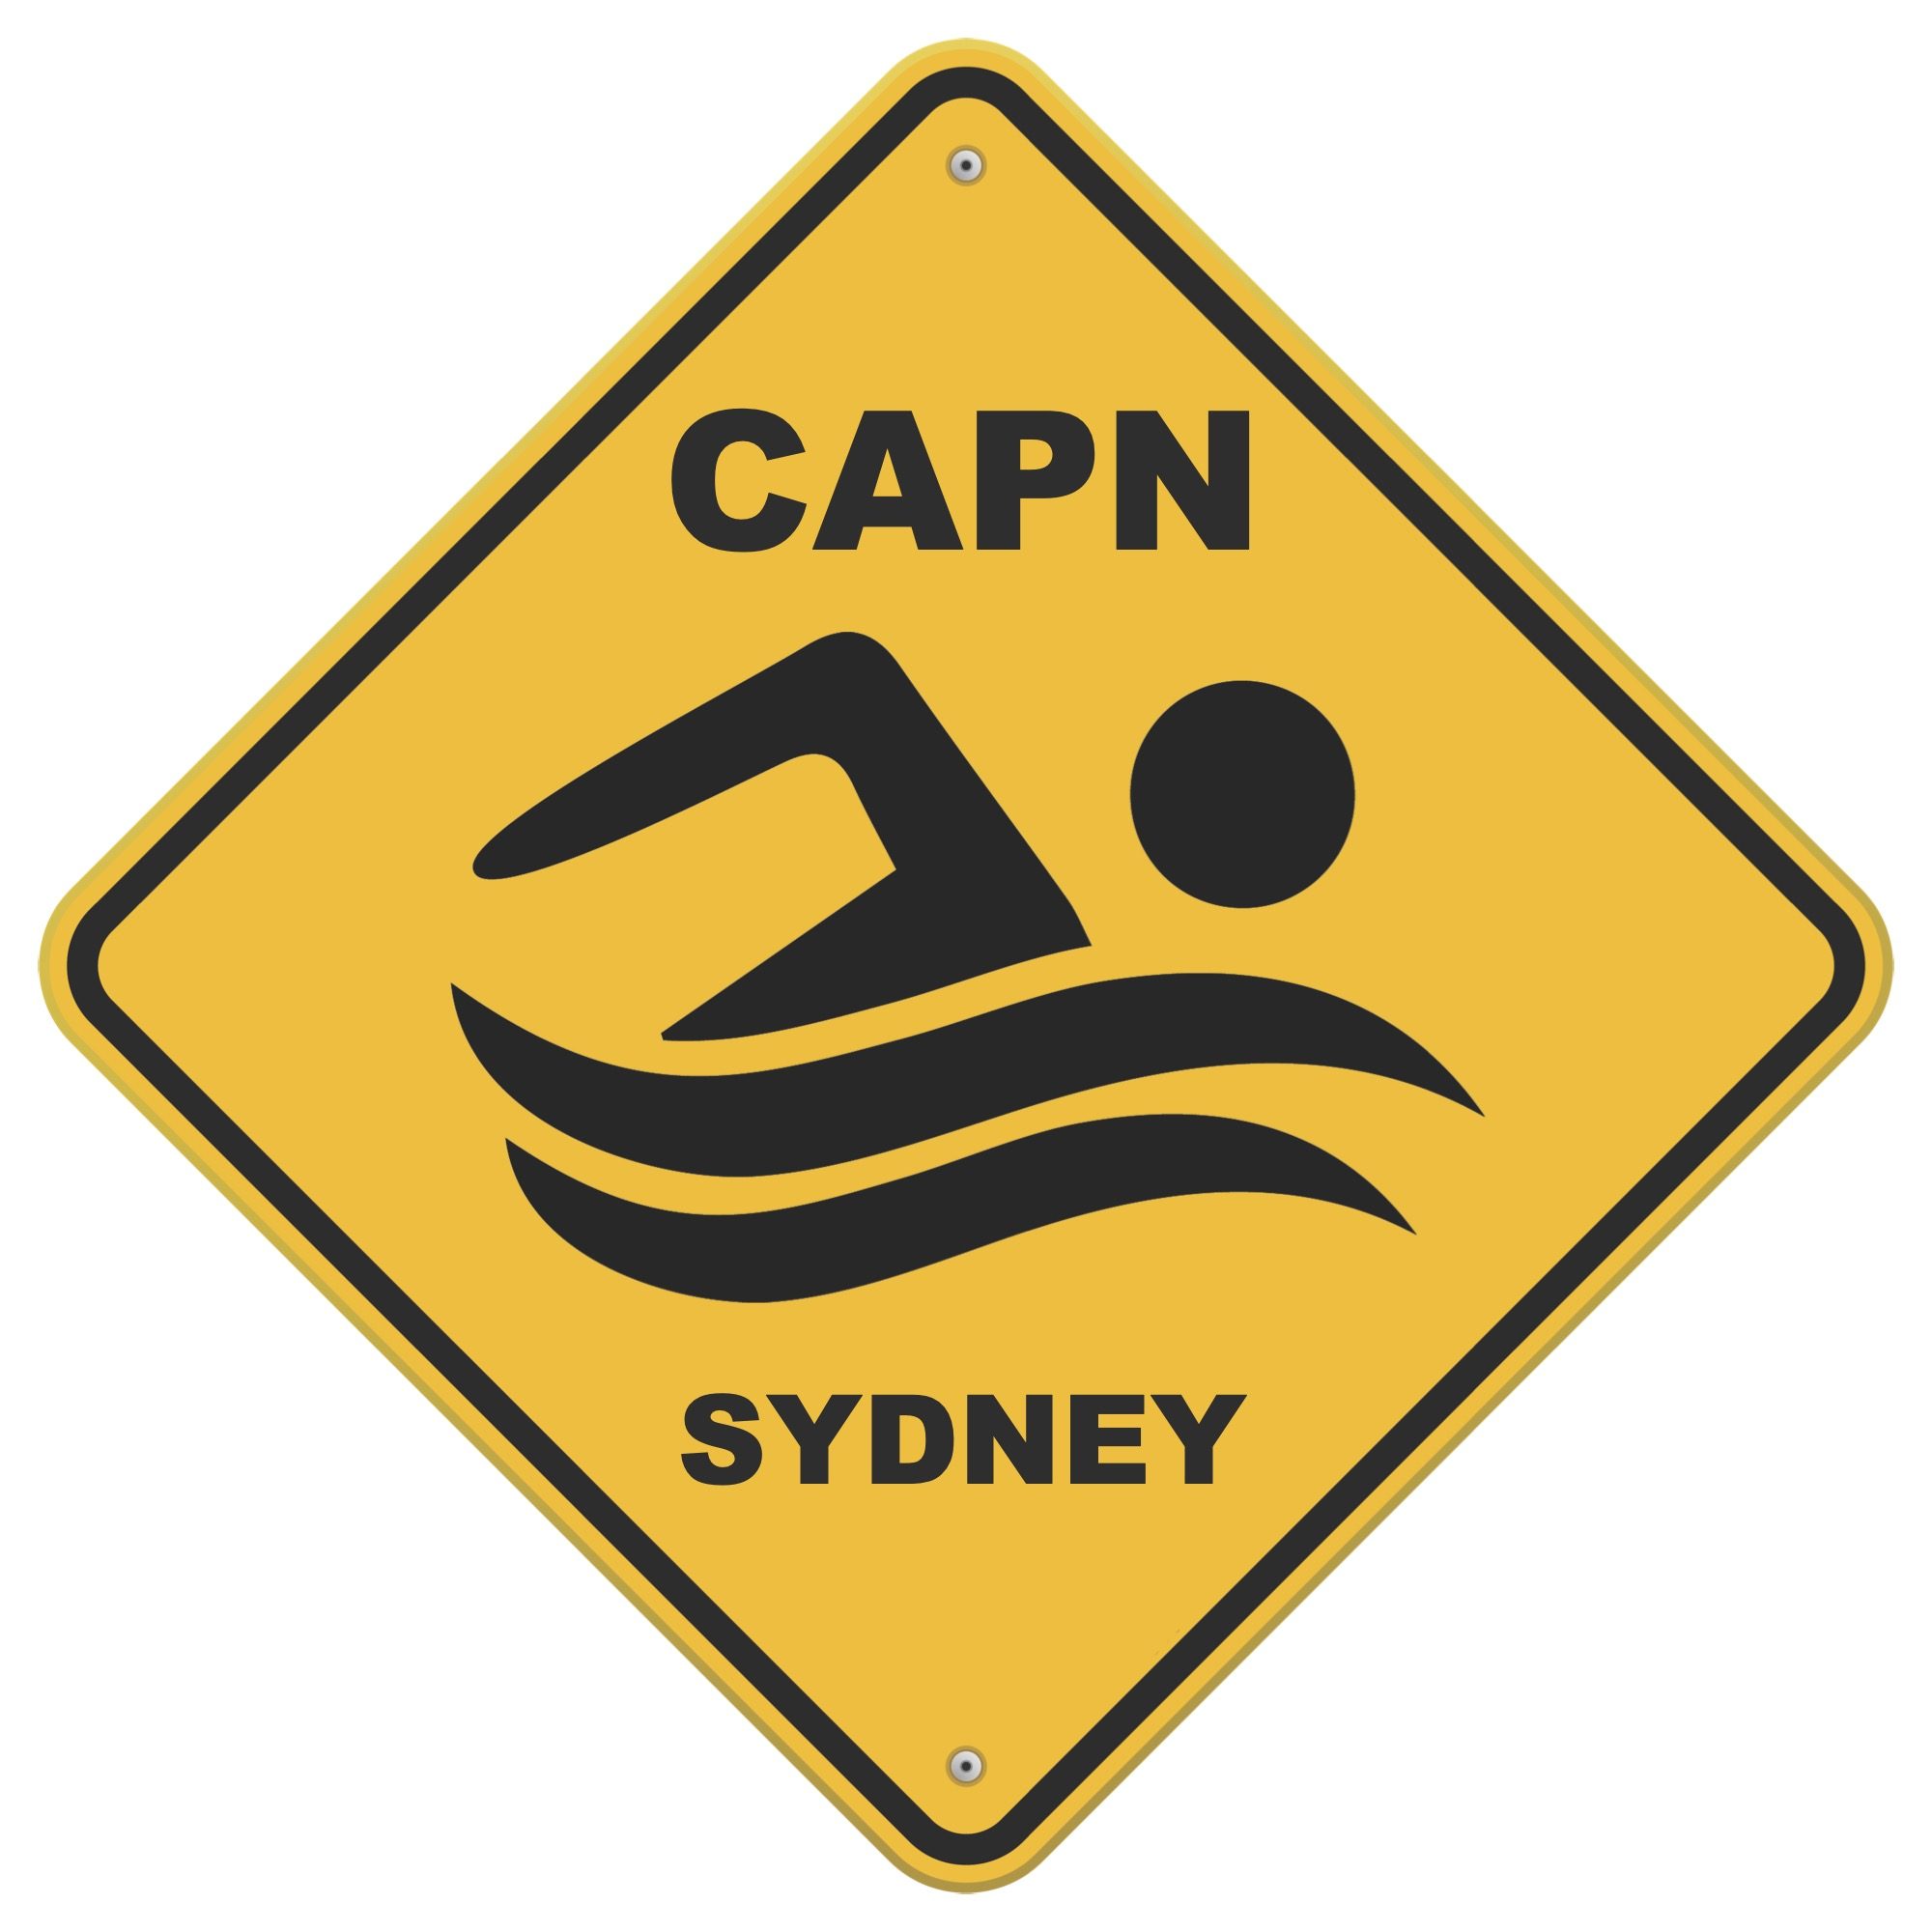 CAPN Sydney 2022